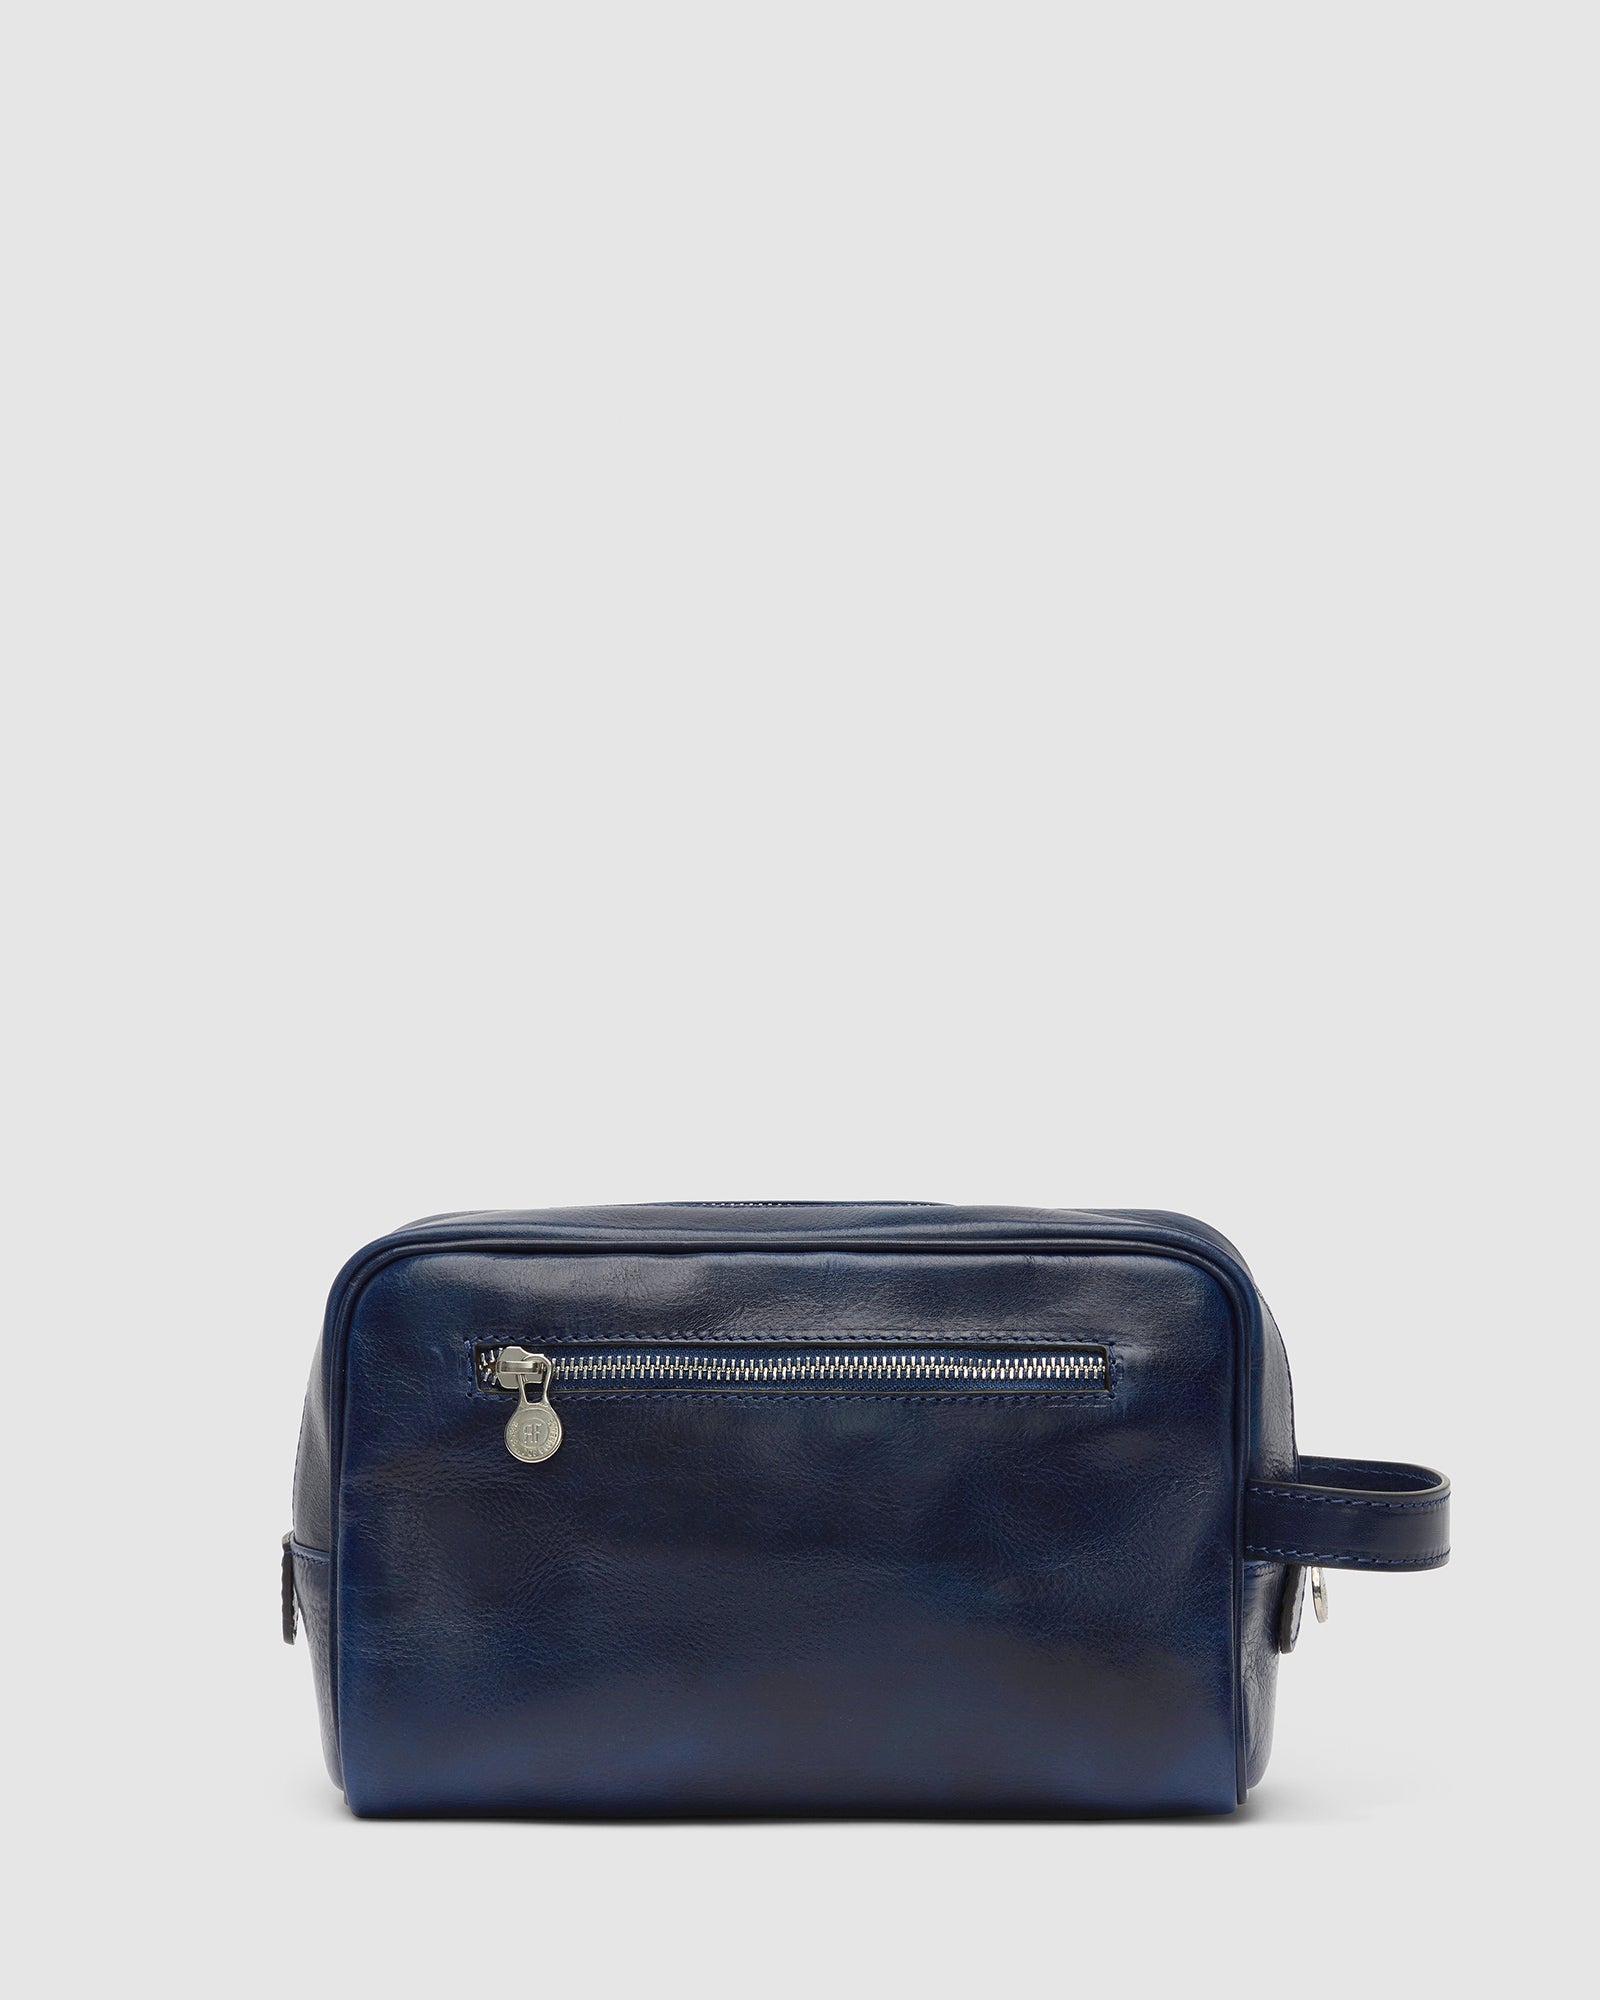 Sette Blue - Leather Dopp Kit